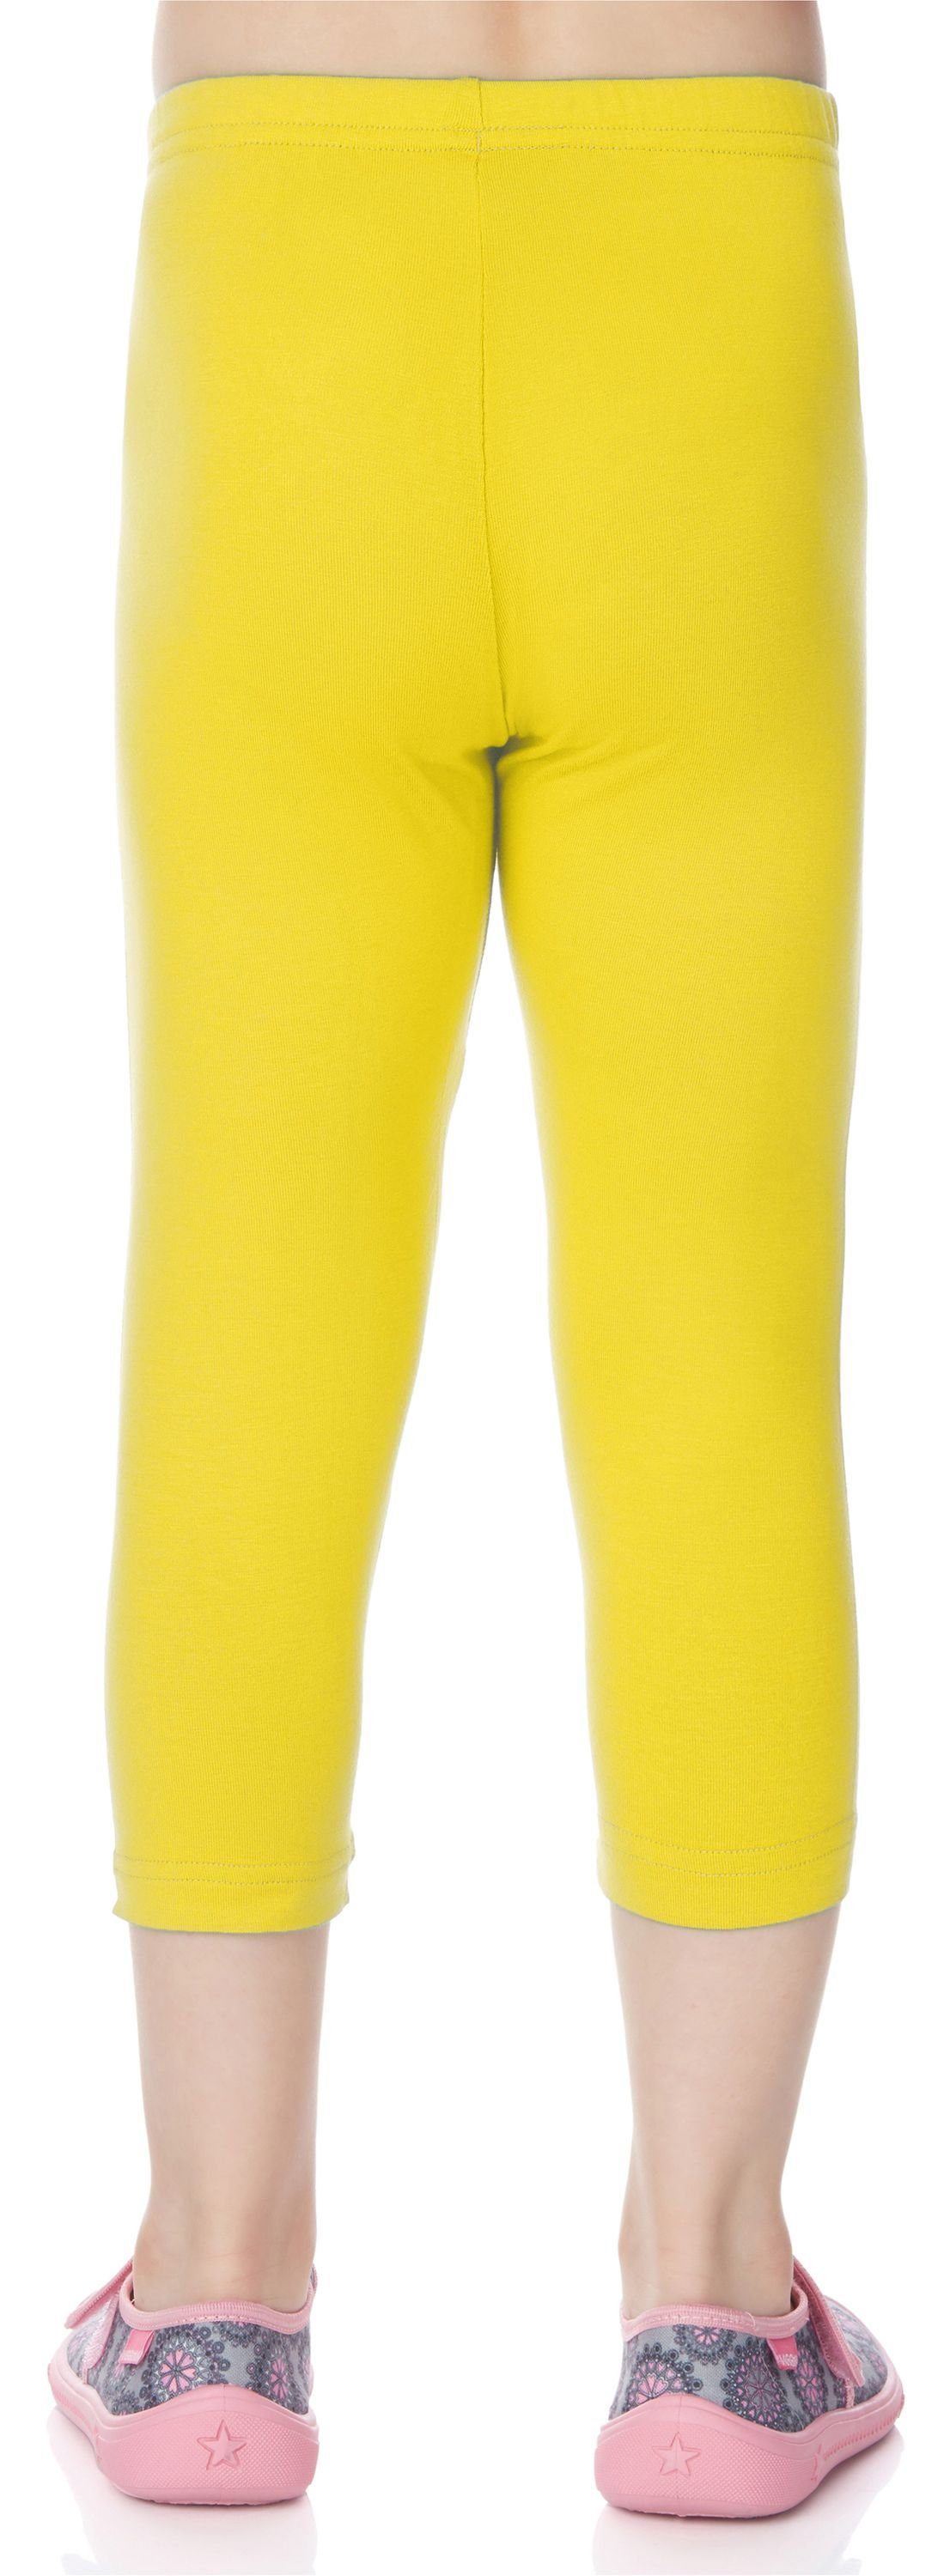 (1-tlg) Viskose Capri 3/4 Mädchen Leggings Merry Style Bund MS10-131 aus elastischer Zitronengelb Leggings